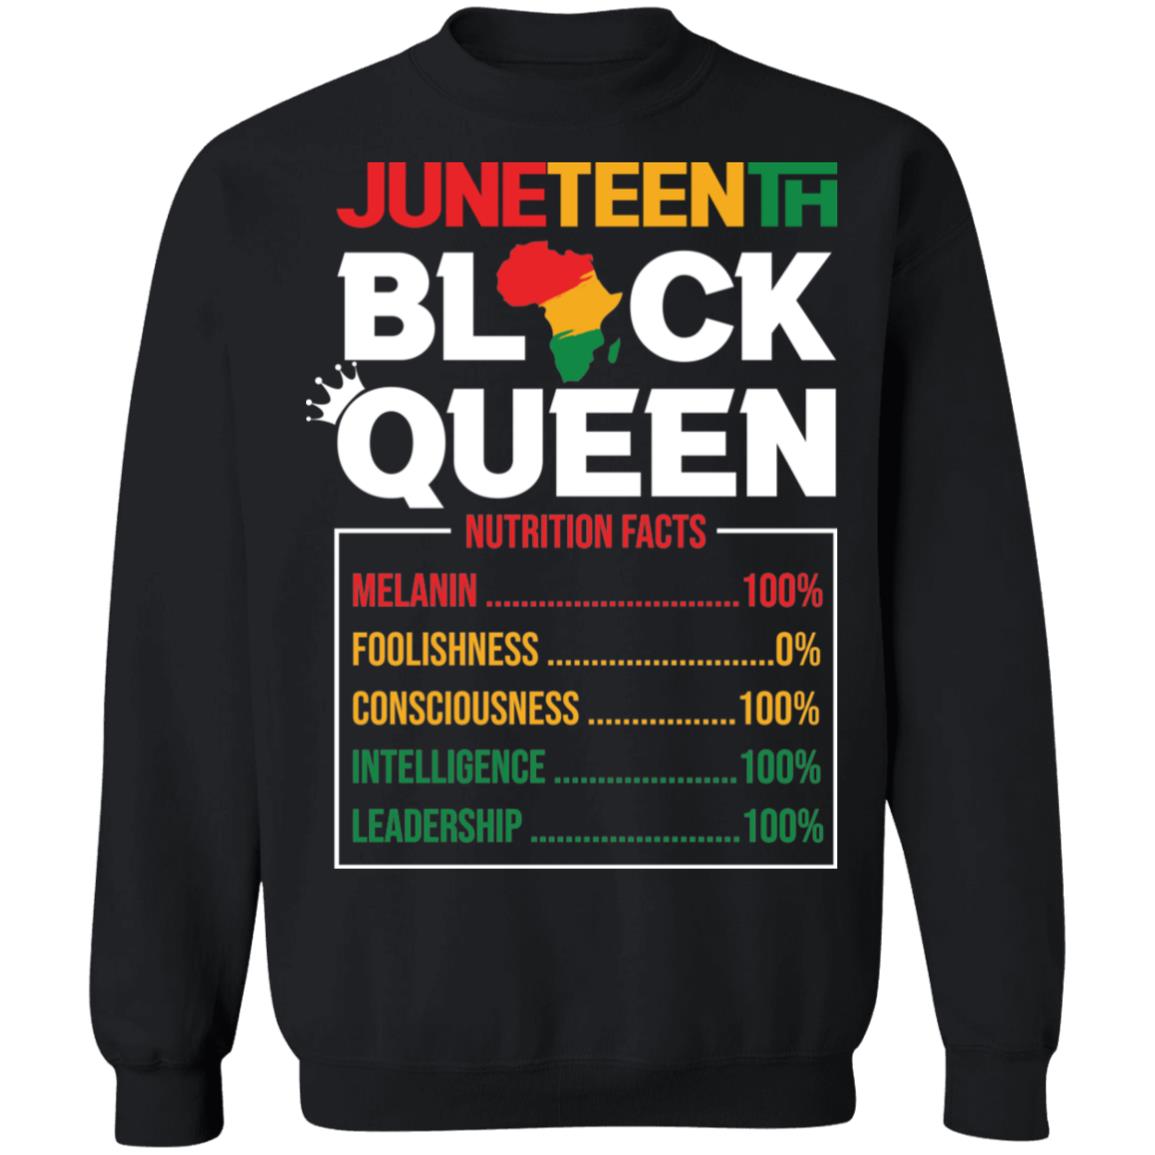 Juneteenth Black Queen Nutrition Facts T-shirt Apparel Gearment Crewneck Sweatshirt Black S